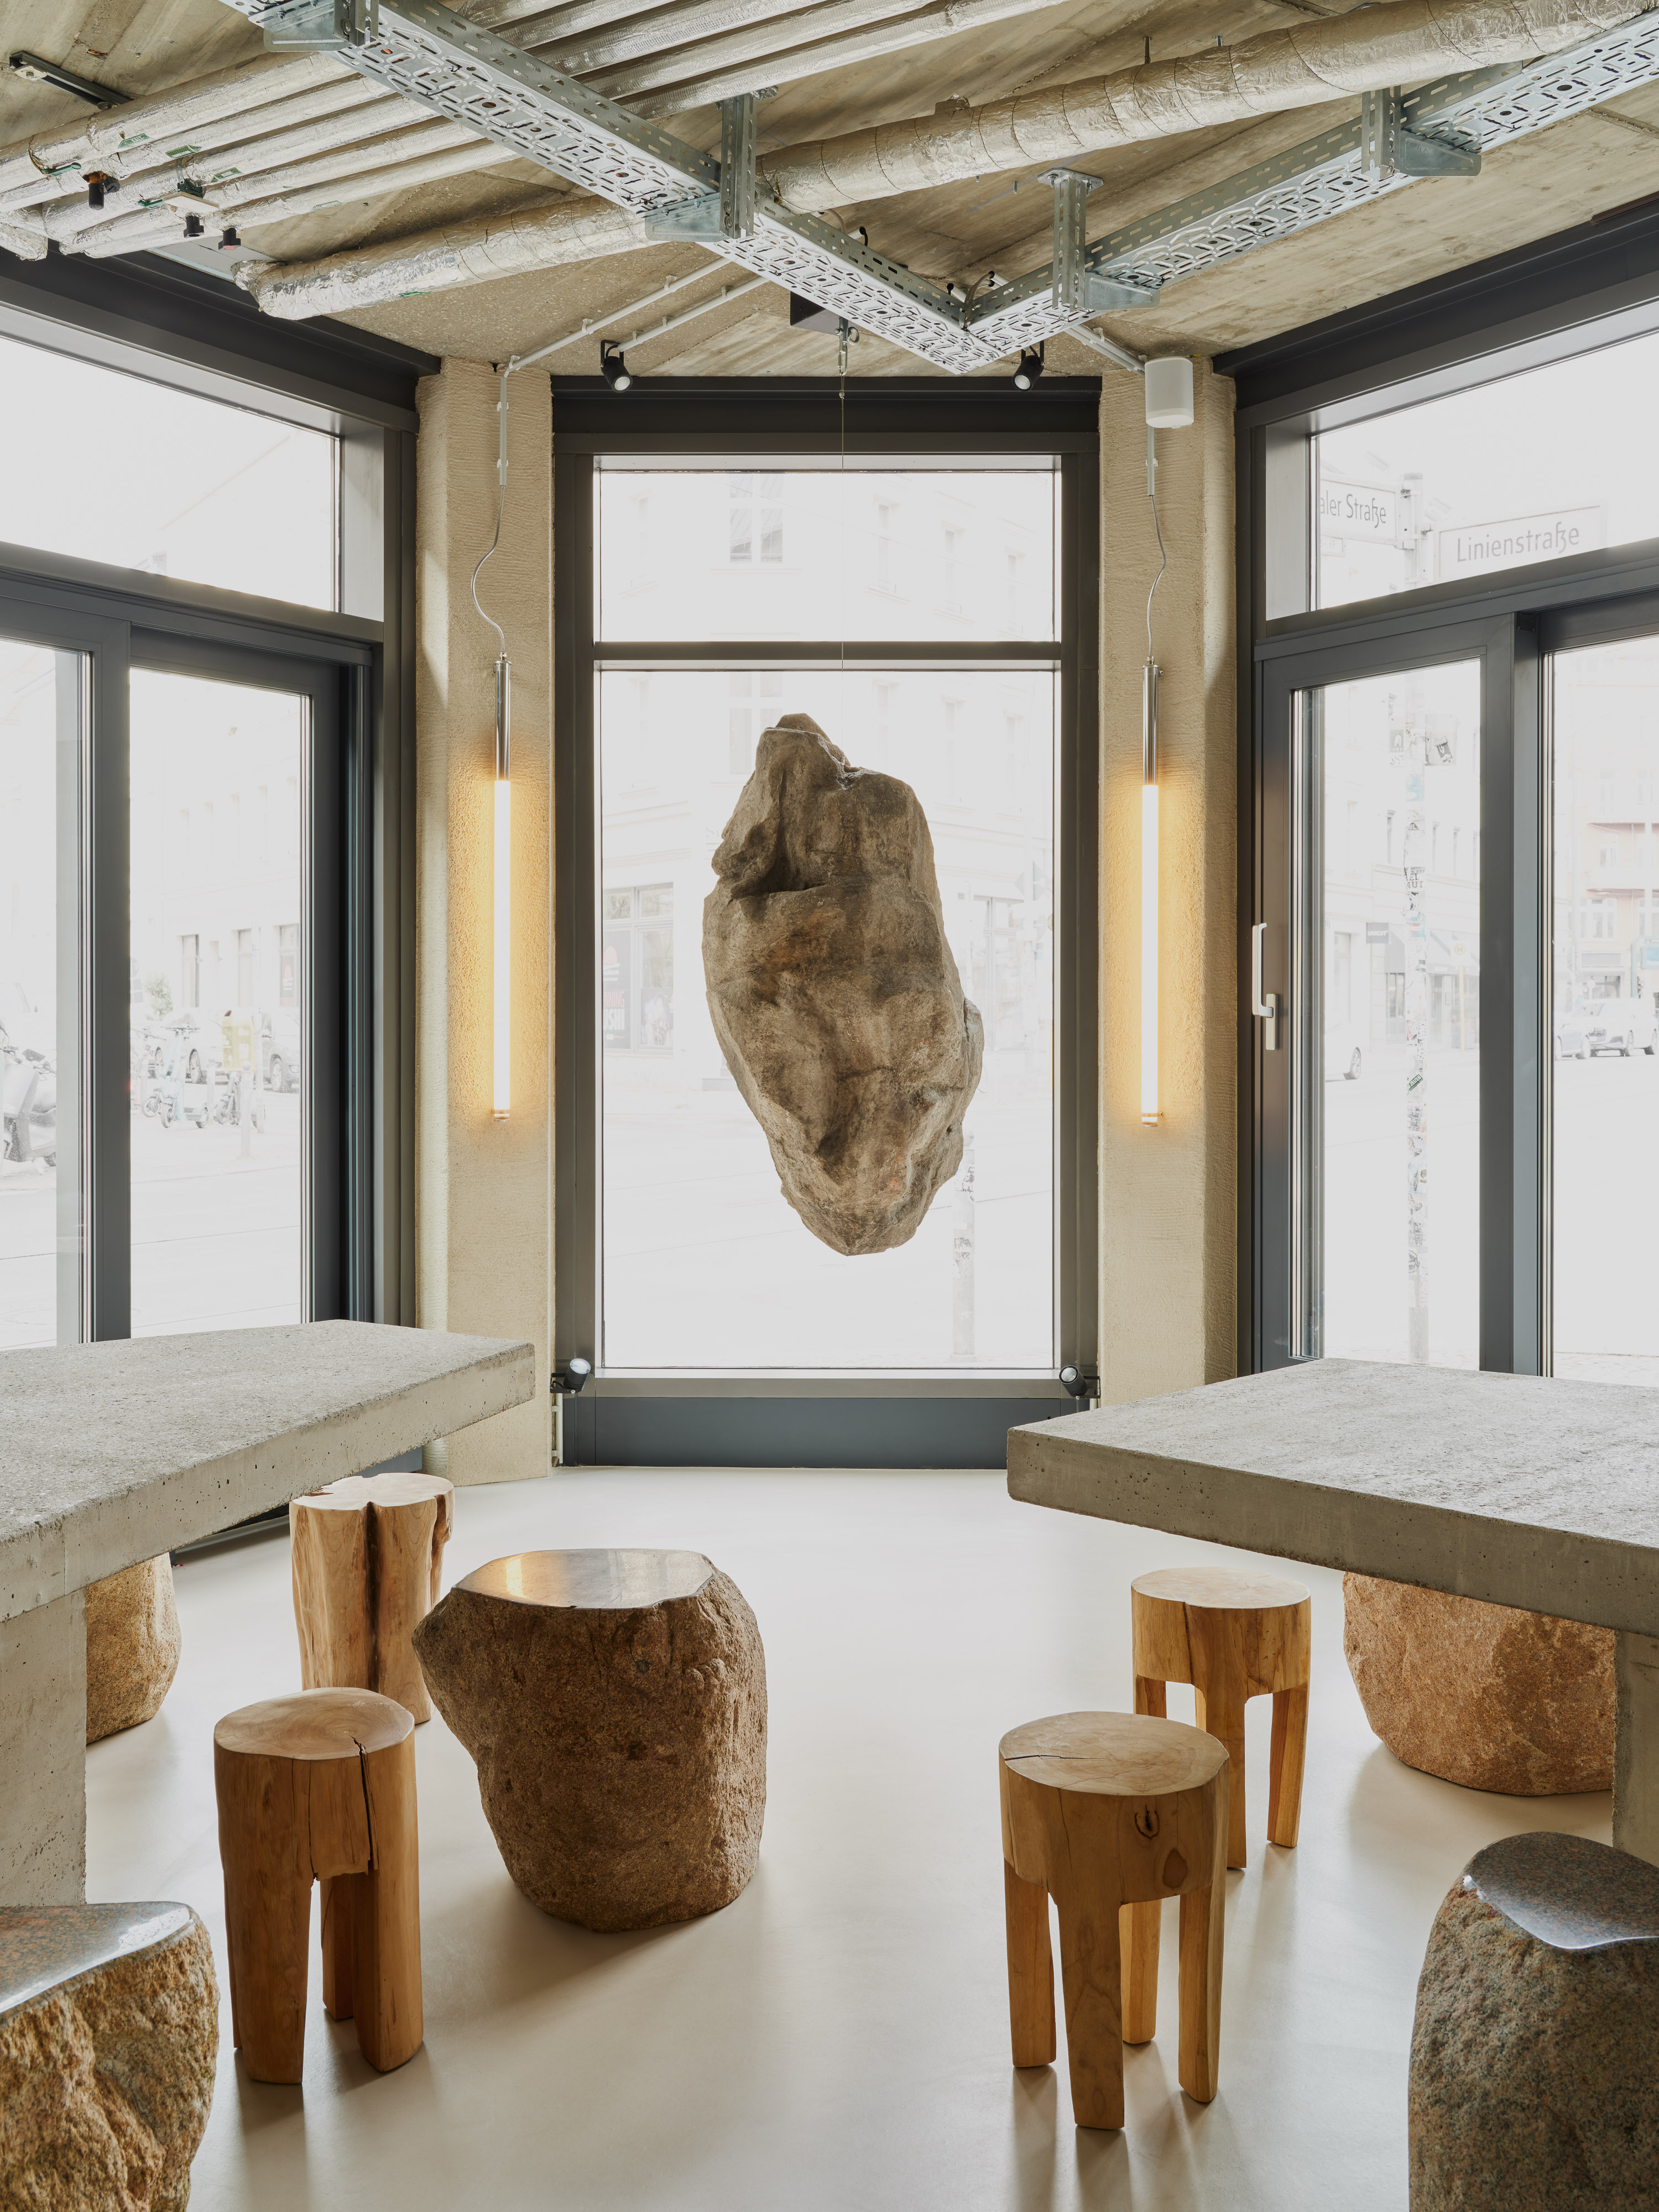 Vaust Studio Honors Fisherman Culture On JIGI Poke Restaurant Design in Berlin